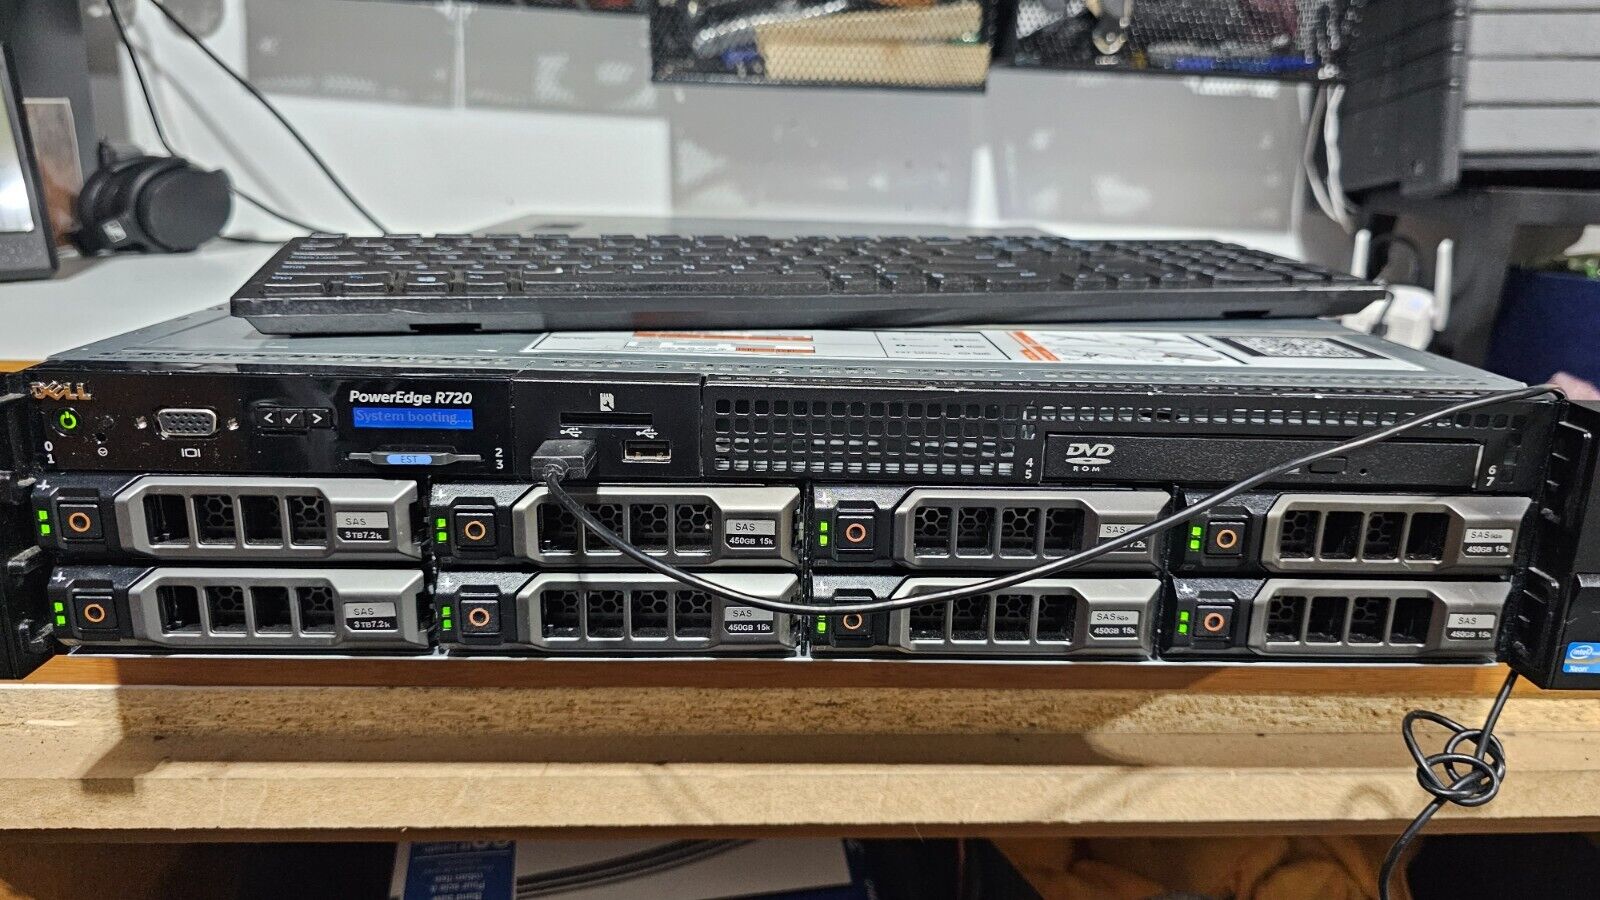 Dell PowerEdge R720 Server - 8x3Tb (24Tb), 2x6c 2.5Ghz CPUs, 128Gb RAM, VMware